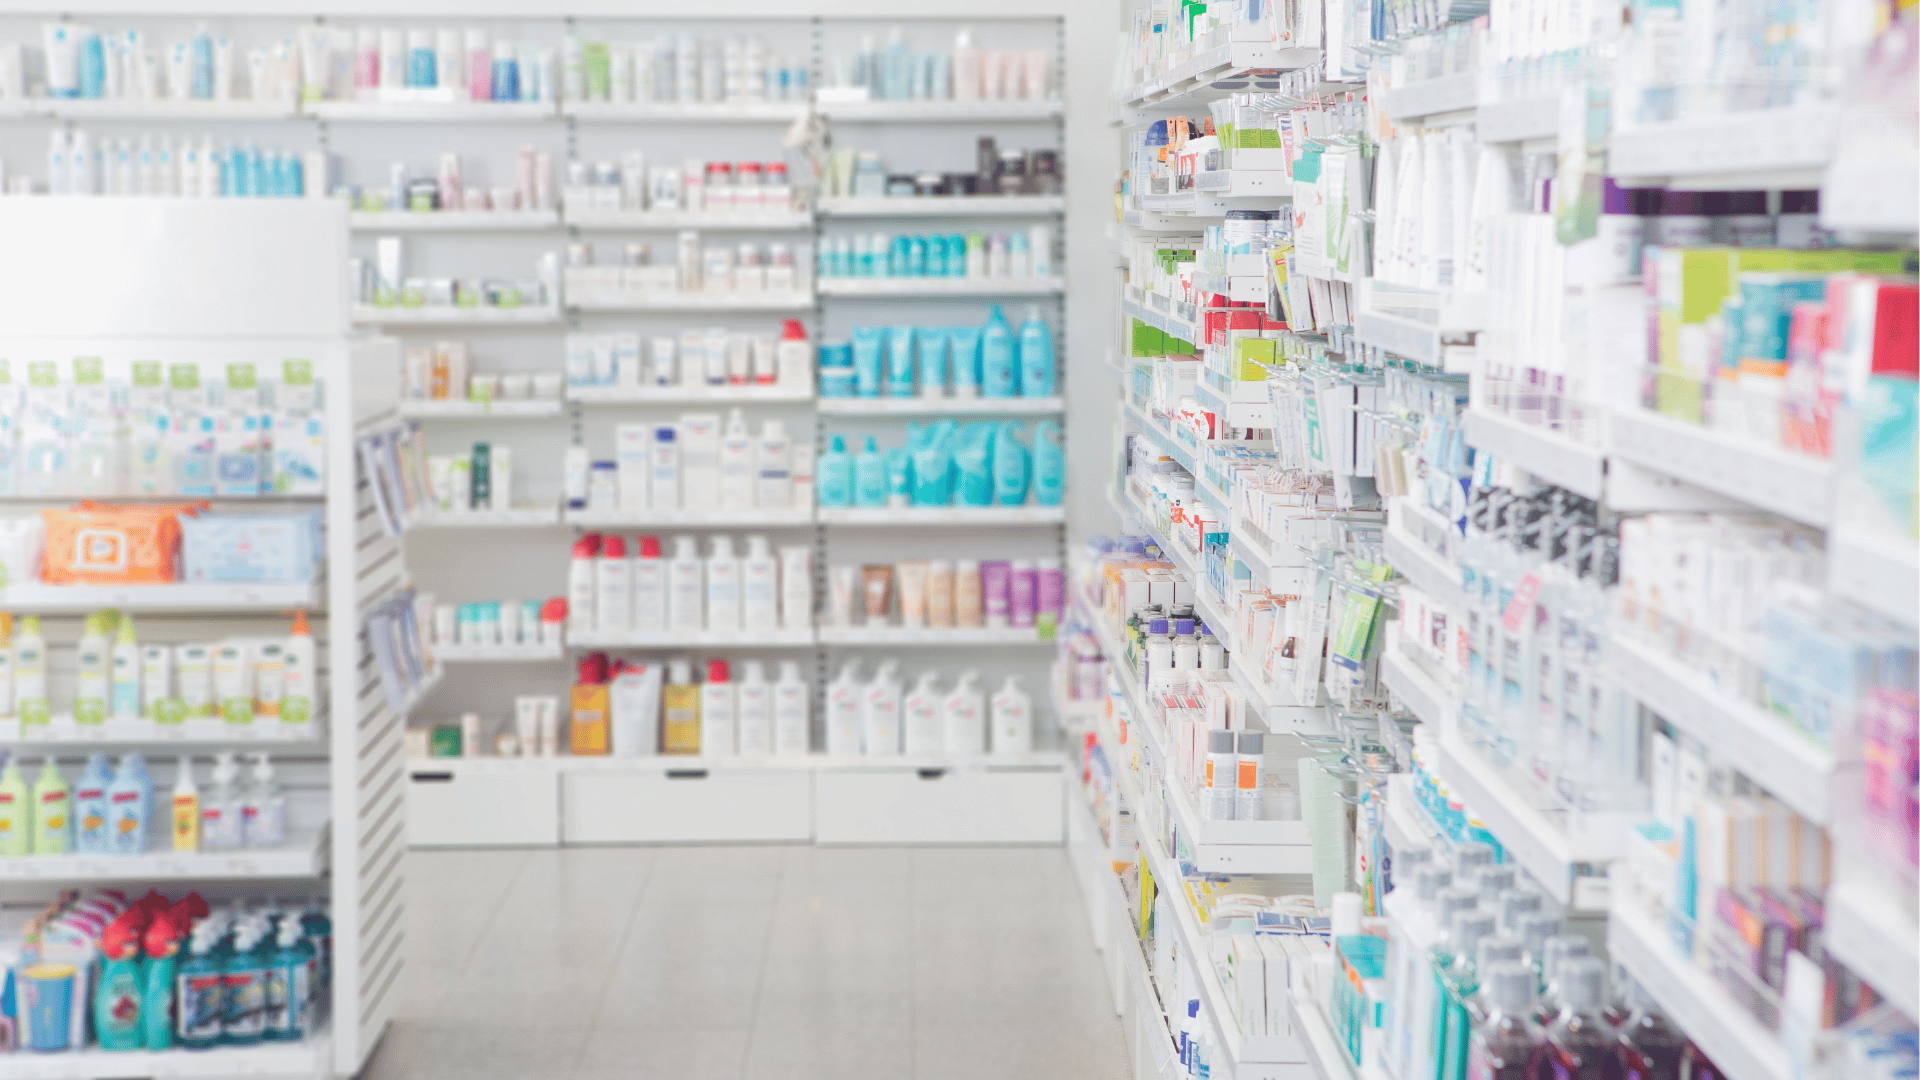 Jacksonville Pharmacies Settle False Claims Act Allegations for $7.4 Million